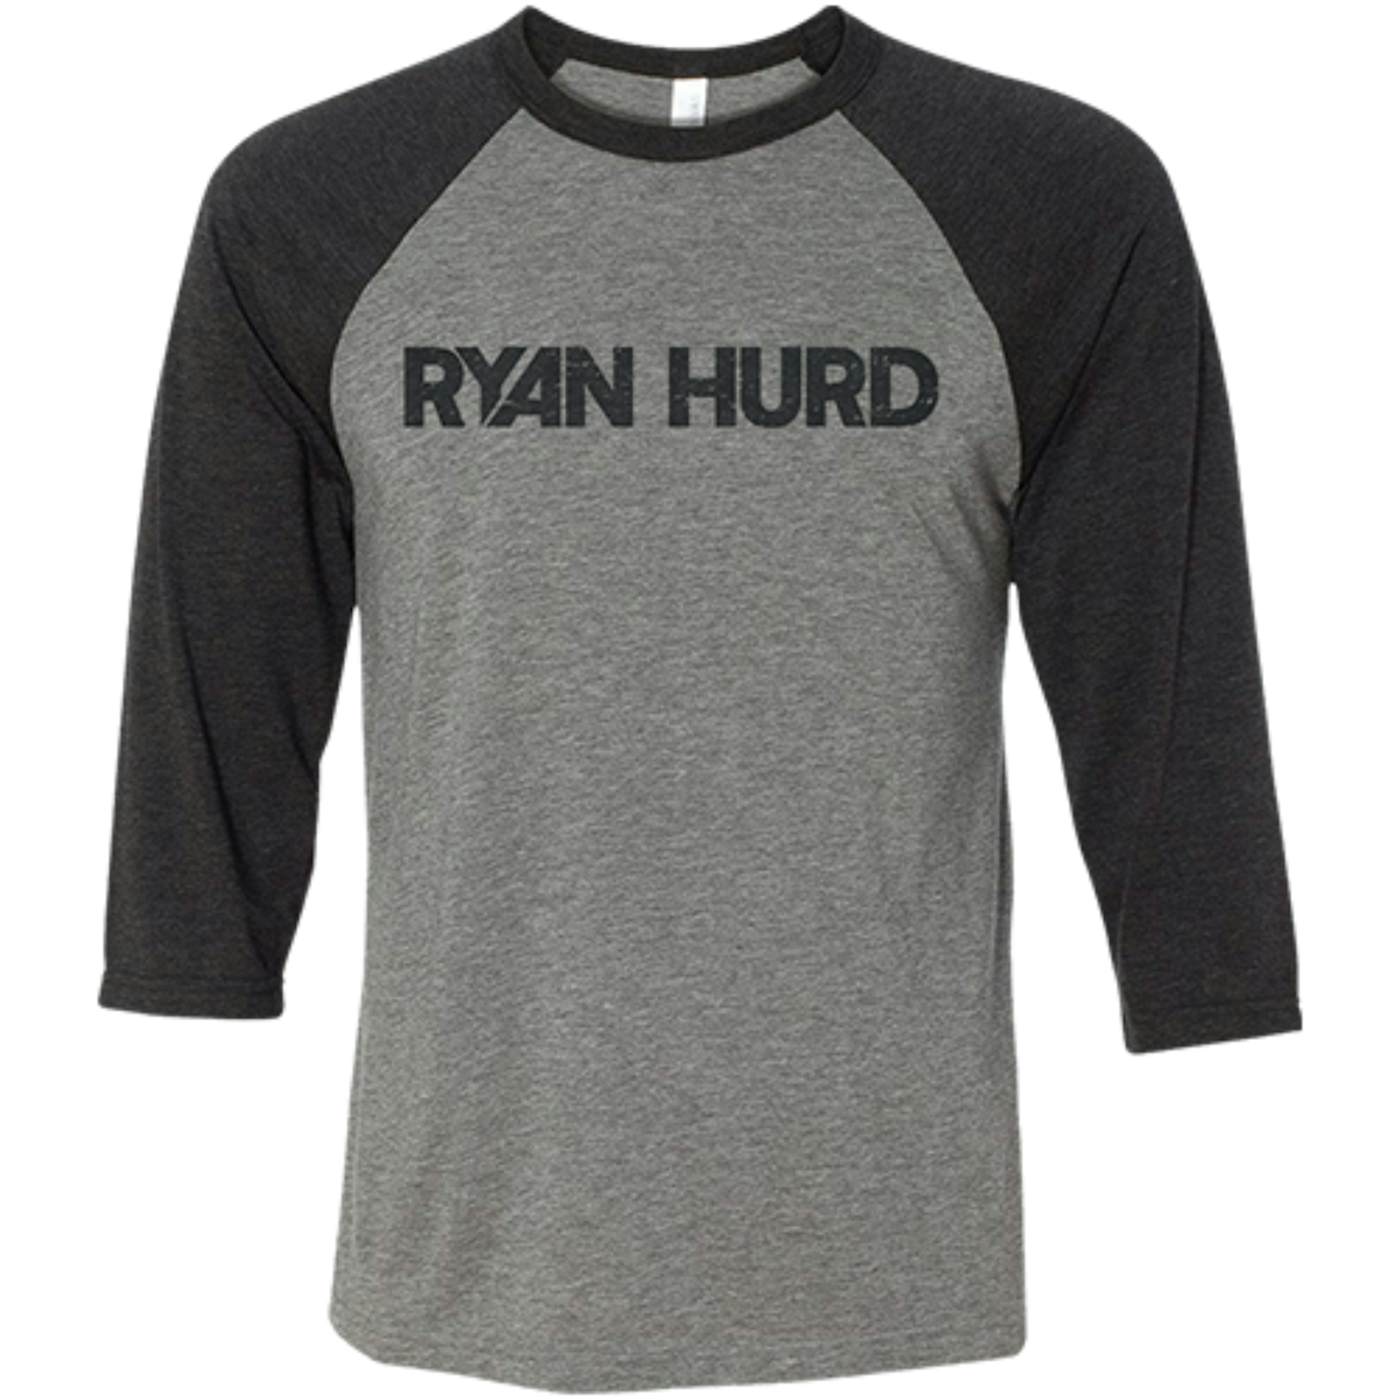 Ryan Hurd Baseball Tee